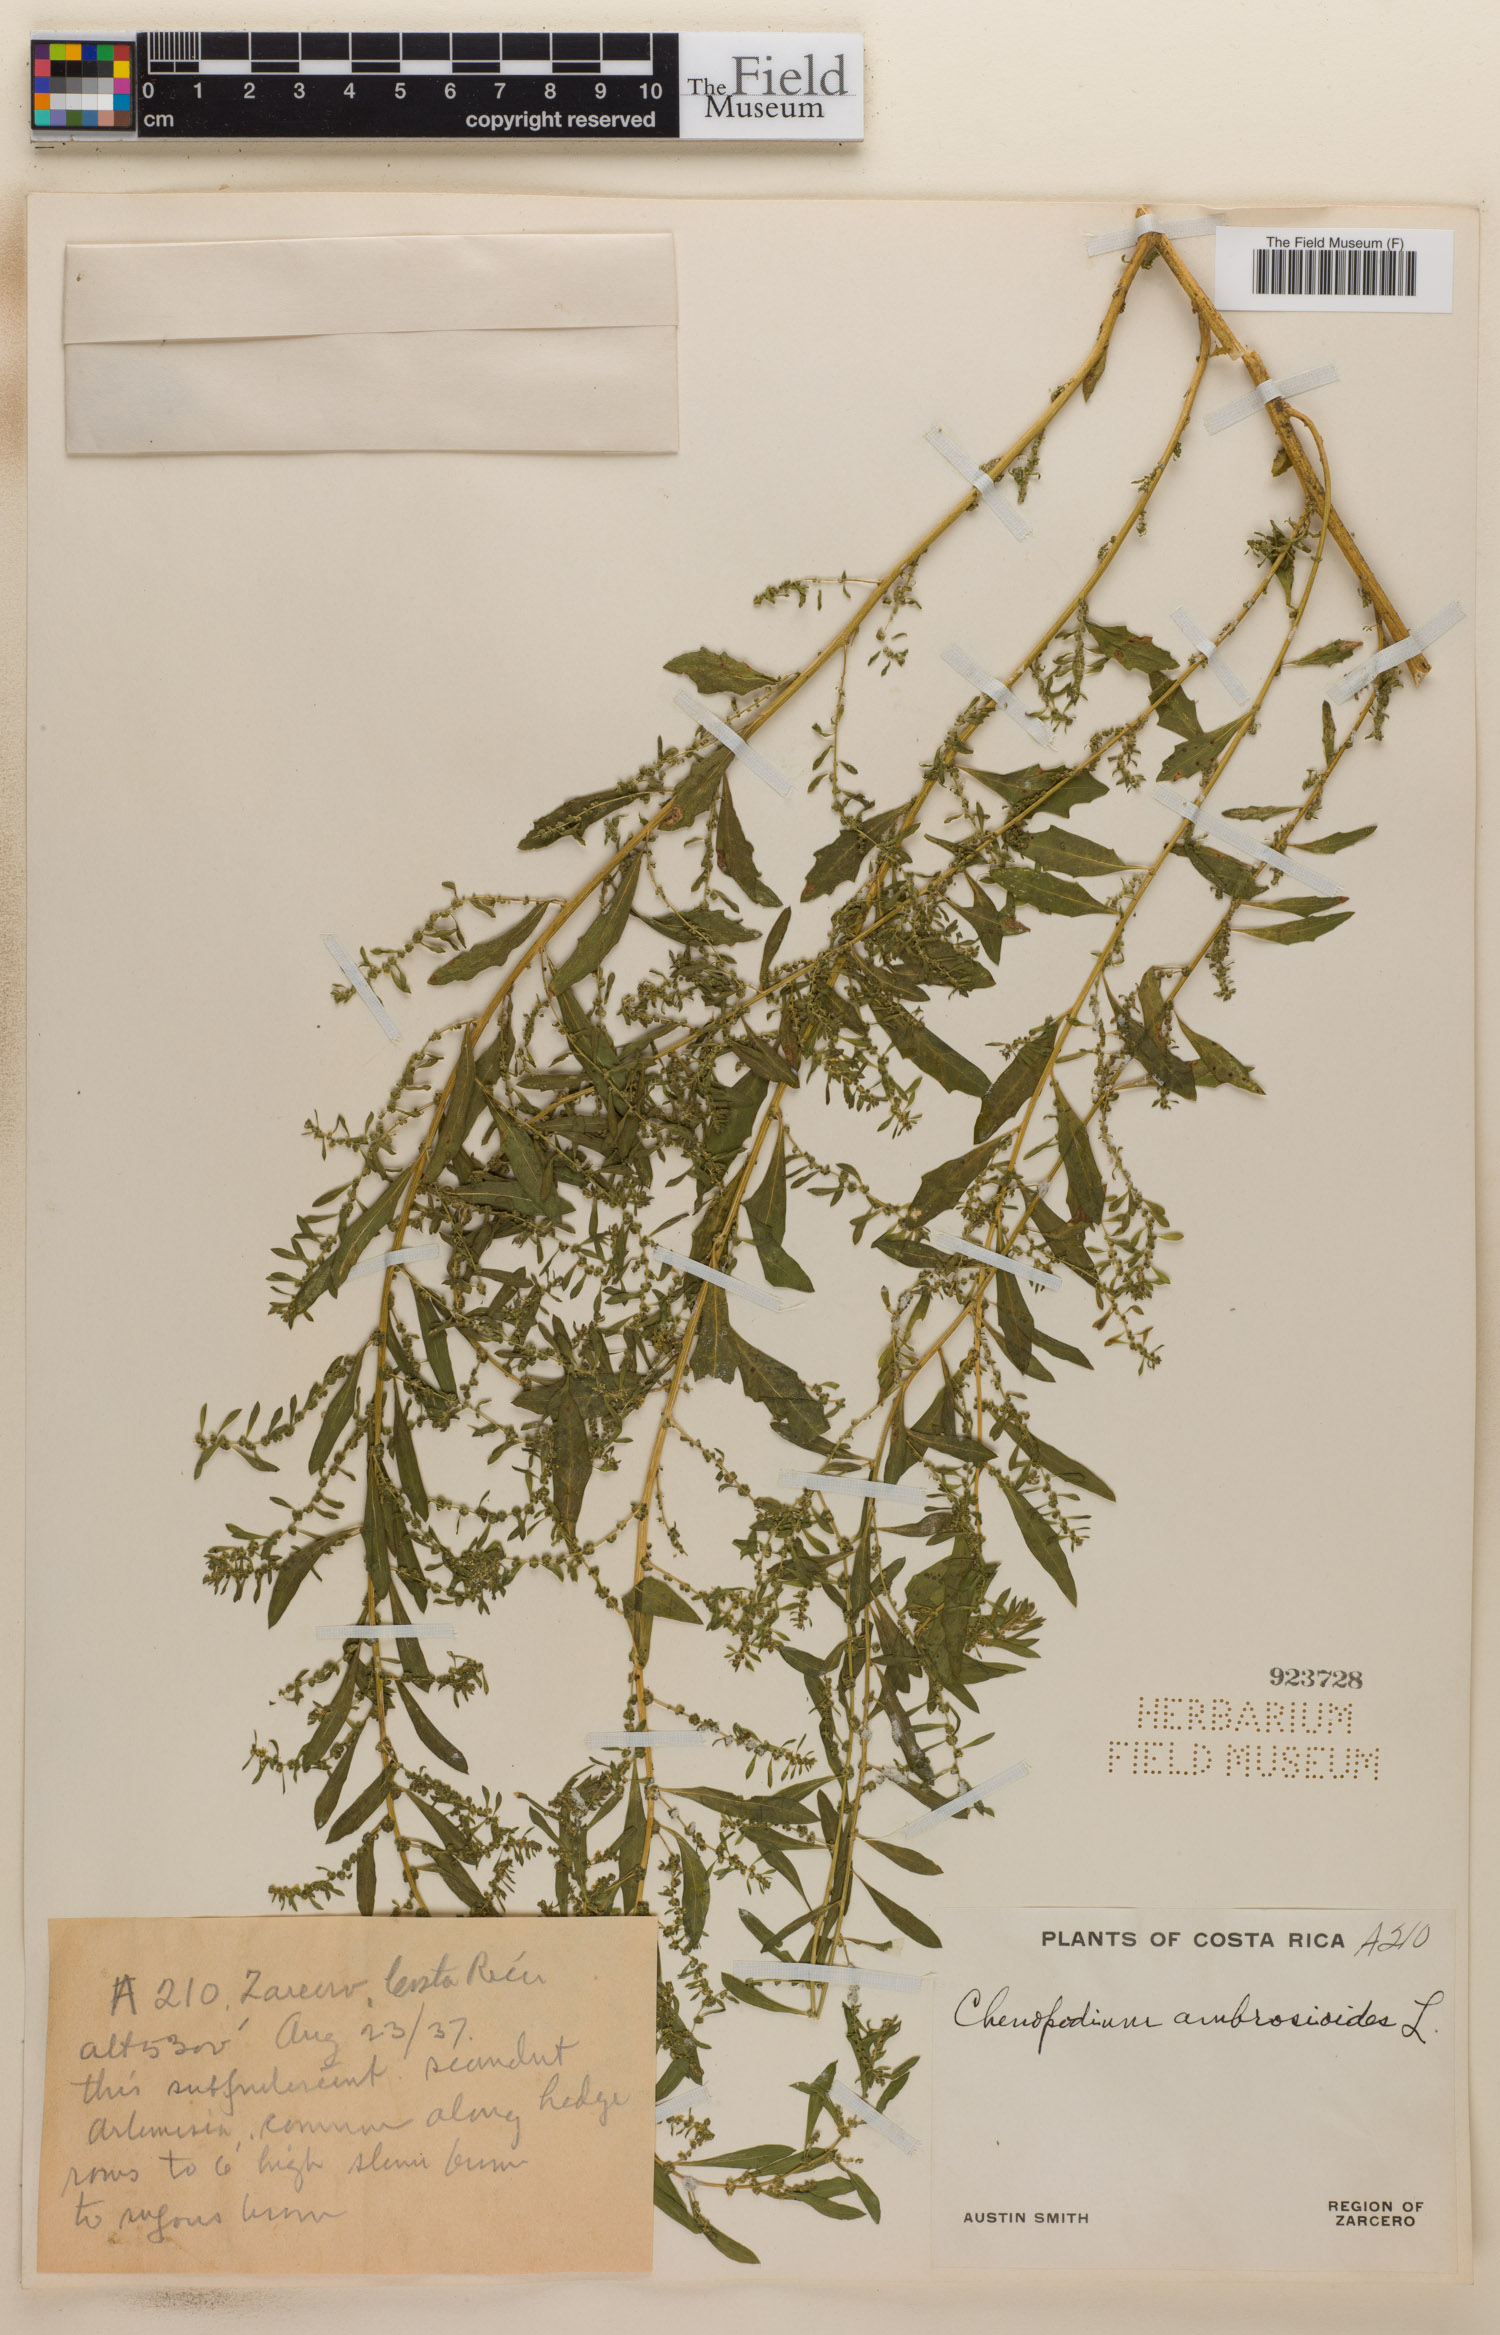 Chenopodium image